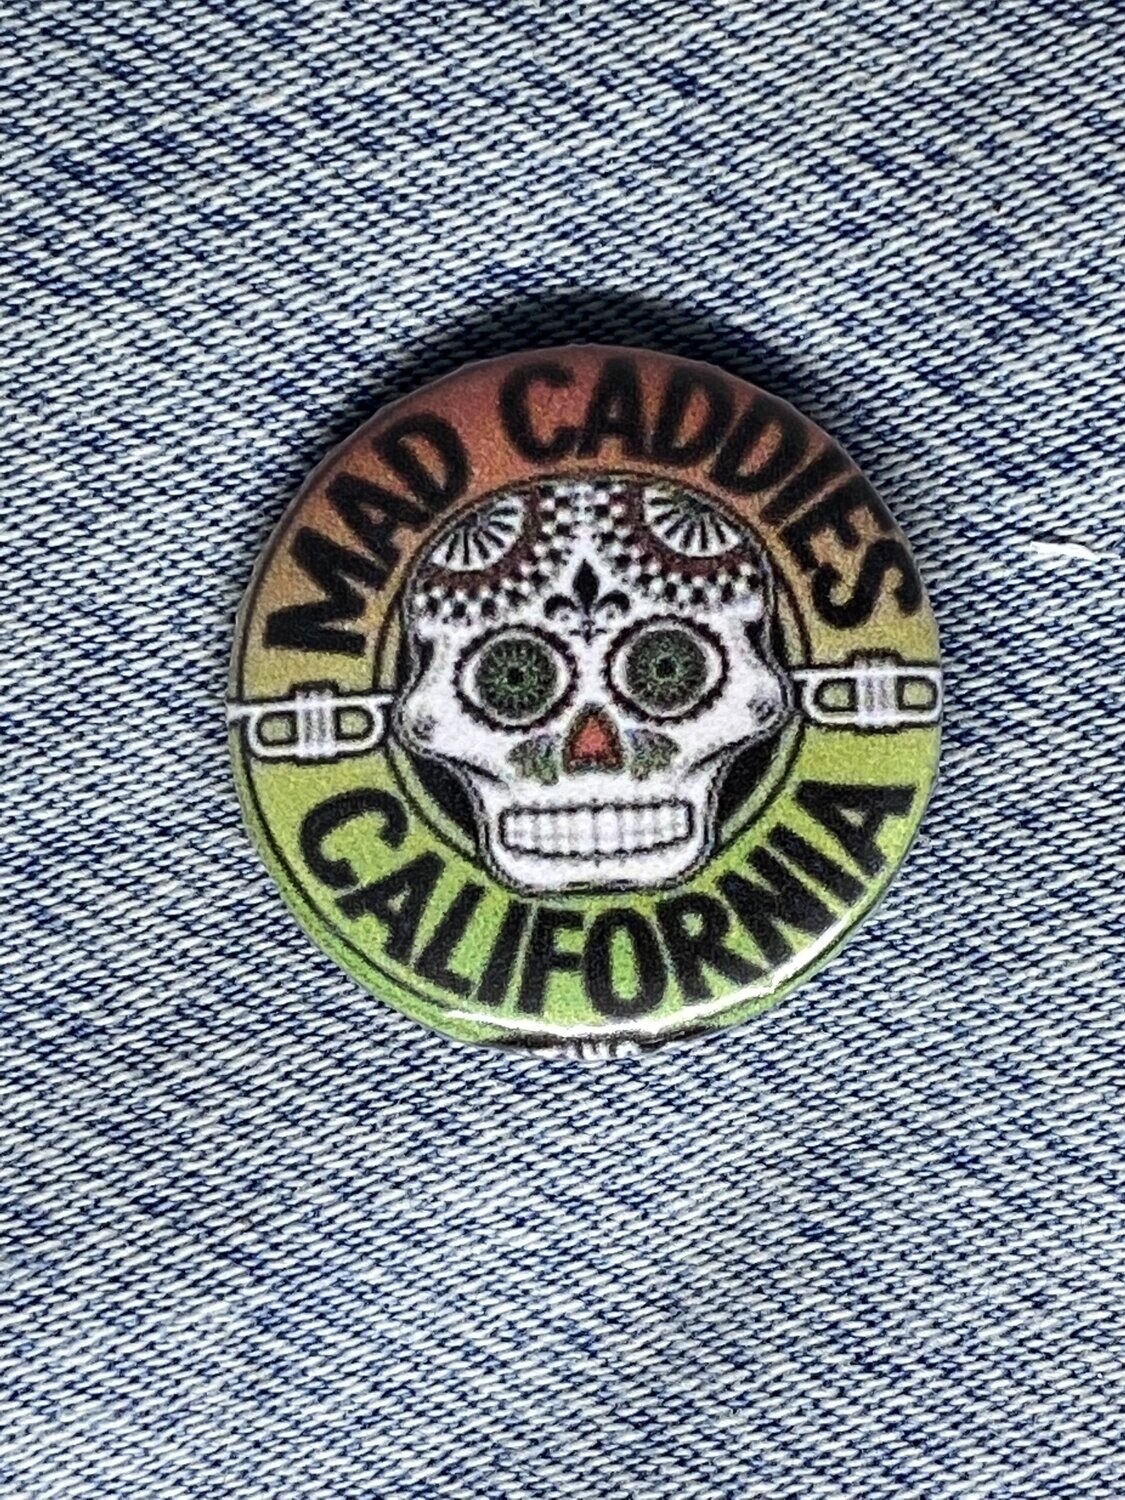 Mad Caddies Badge